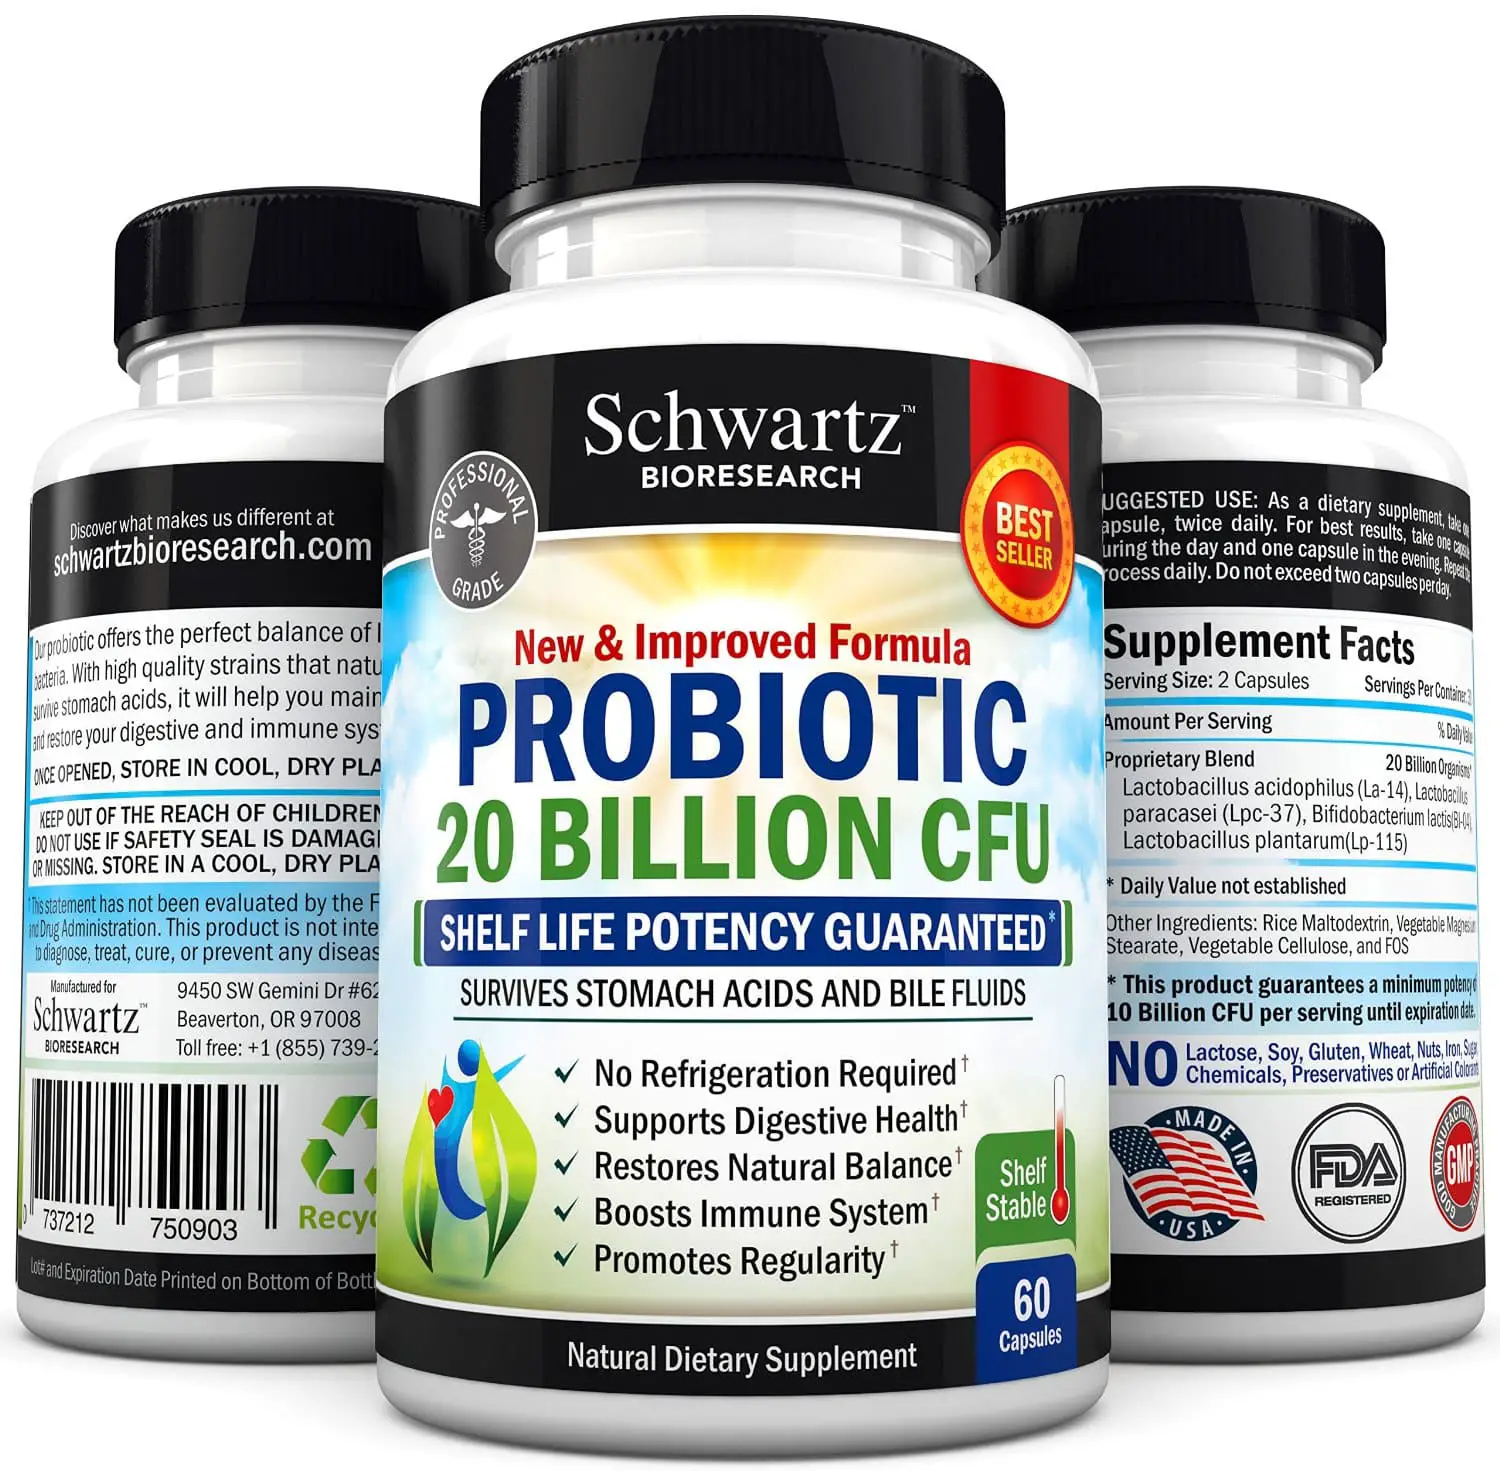 Popular Product Reviews by Amy: Probiotics Supplement 20 Billion CFUs ...